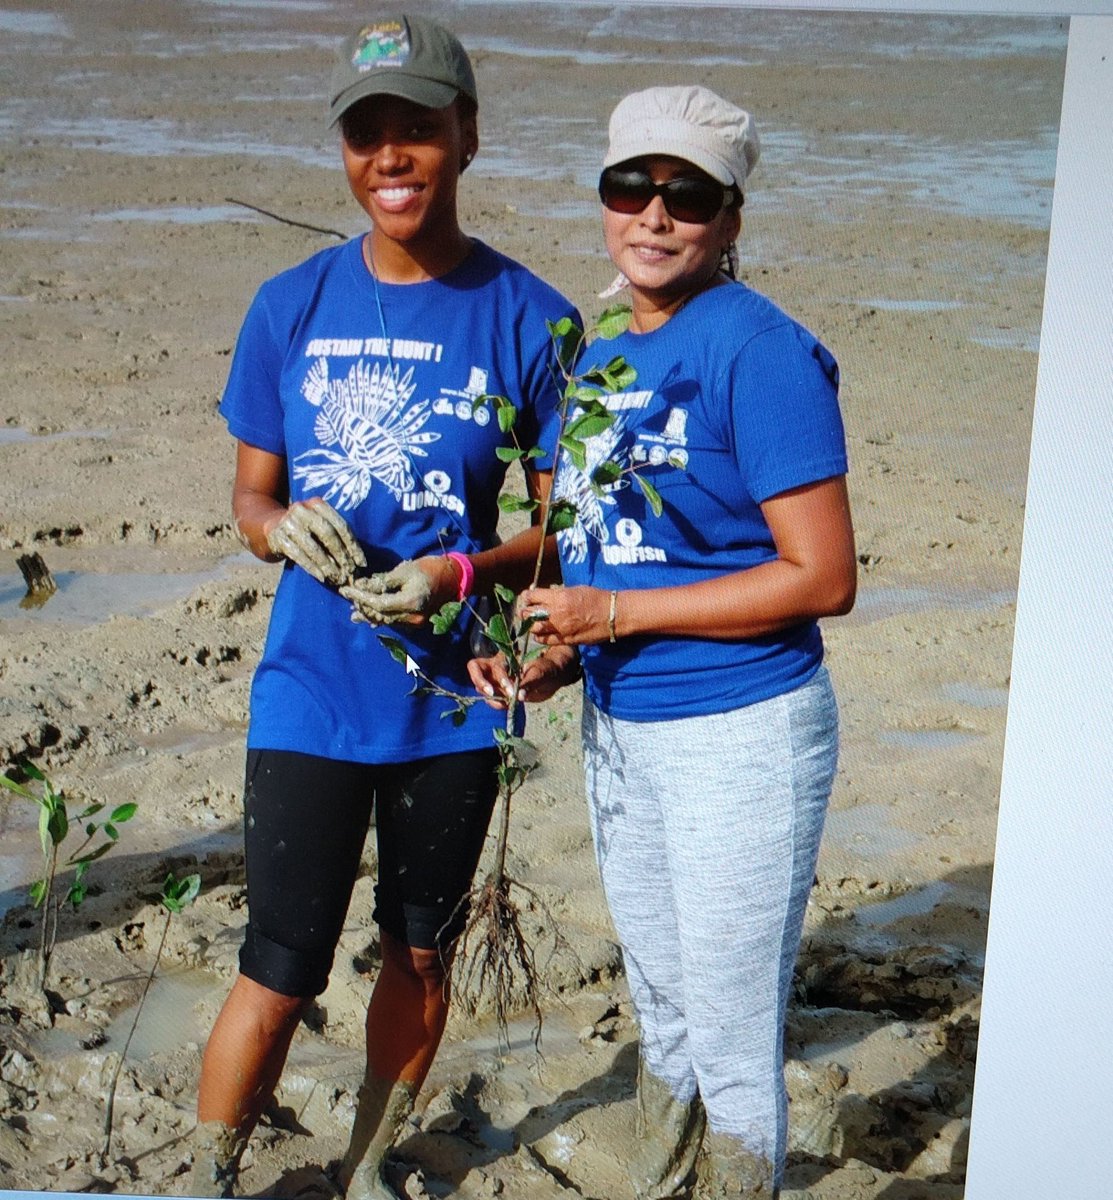 Mangrove replanting exercise at Brickfield with @IMACHAG @PlanningTT #climatechangeresilience #mangroves # trinidadandtobago